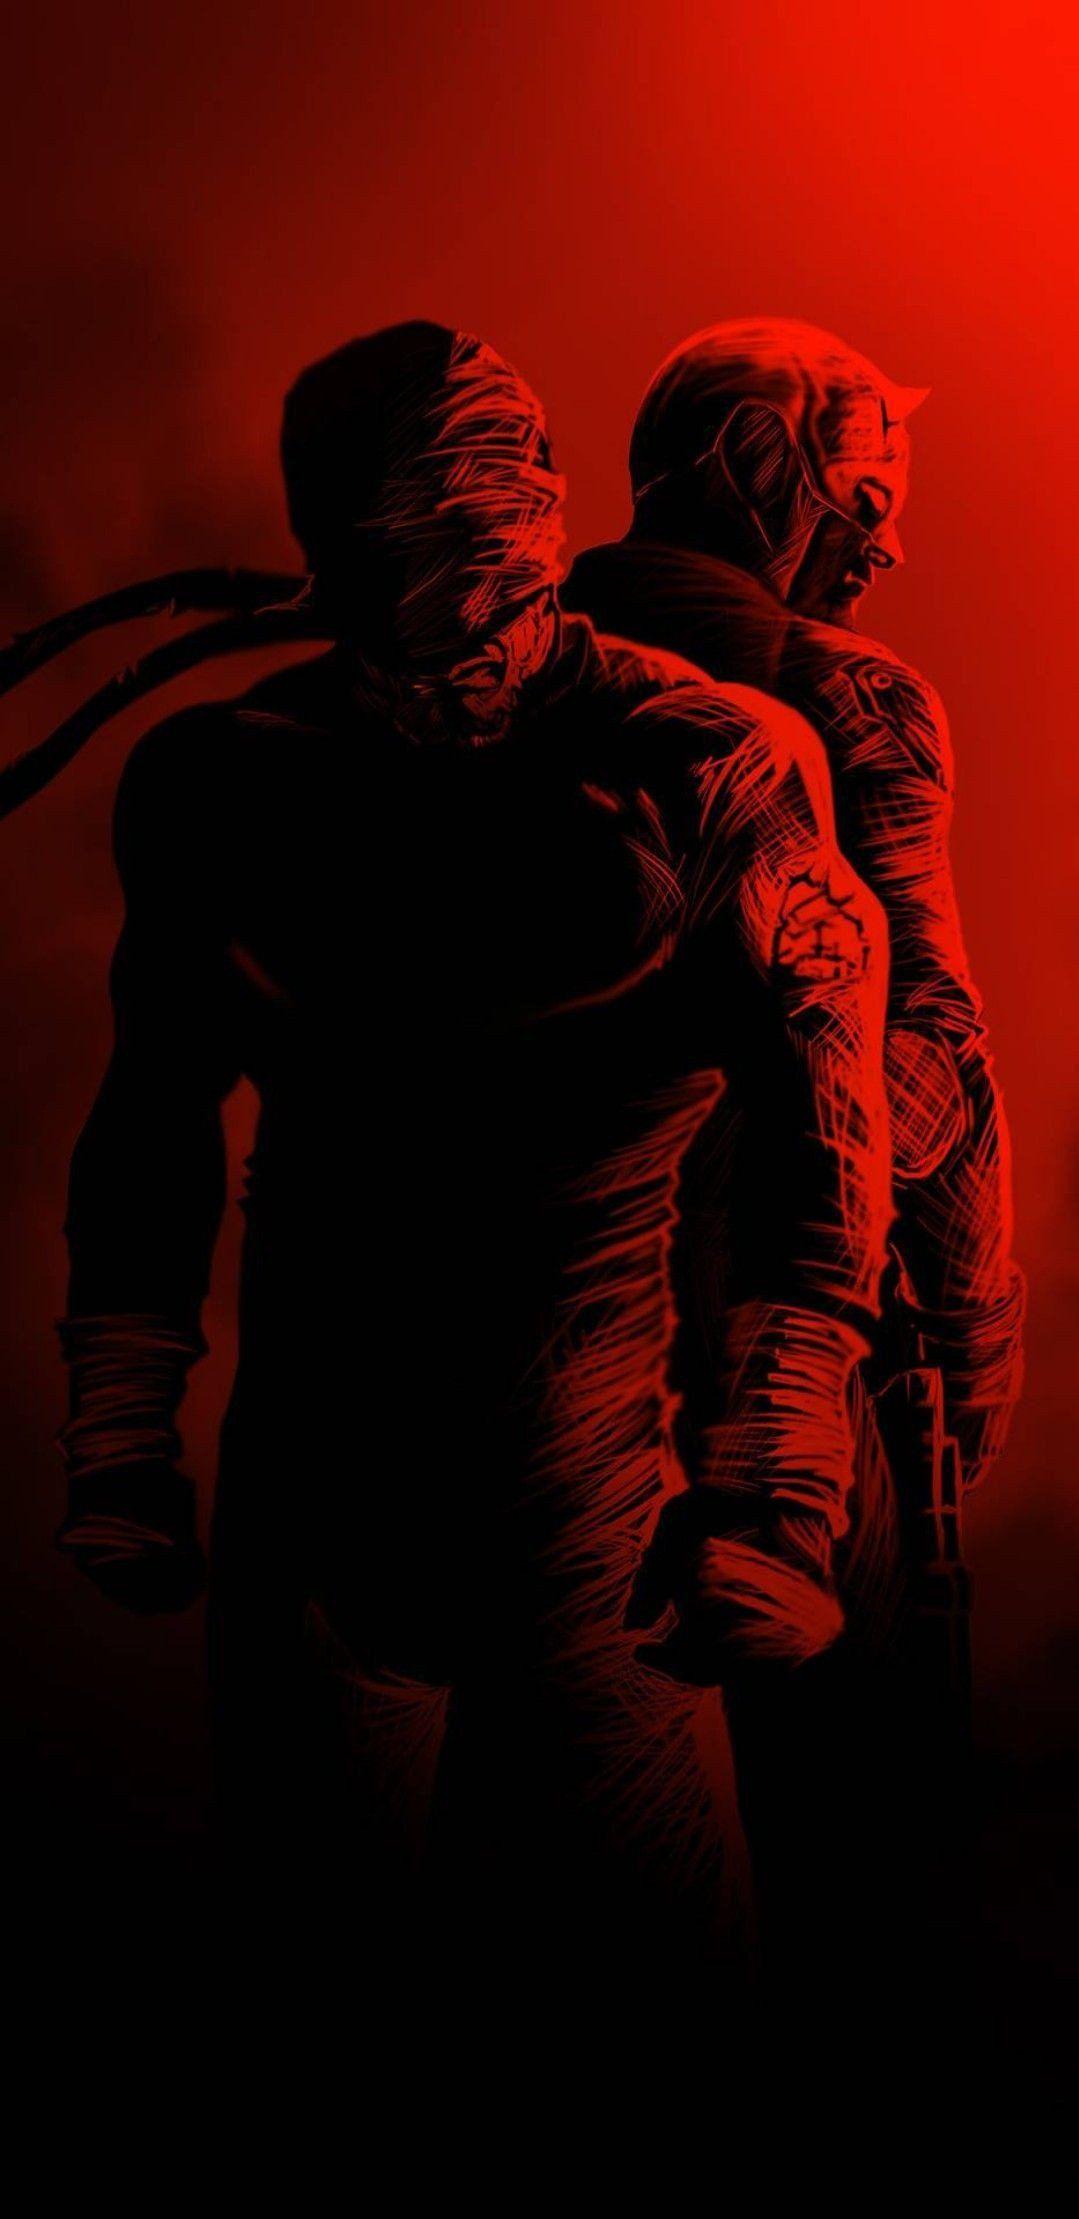 Daredevil. Smart Phone Wallpaper kphonewallpaperreddit #iphonewallpaperreddit #redditwallpaper. Daredevil comic, Marvel daredevil, Daredevil